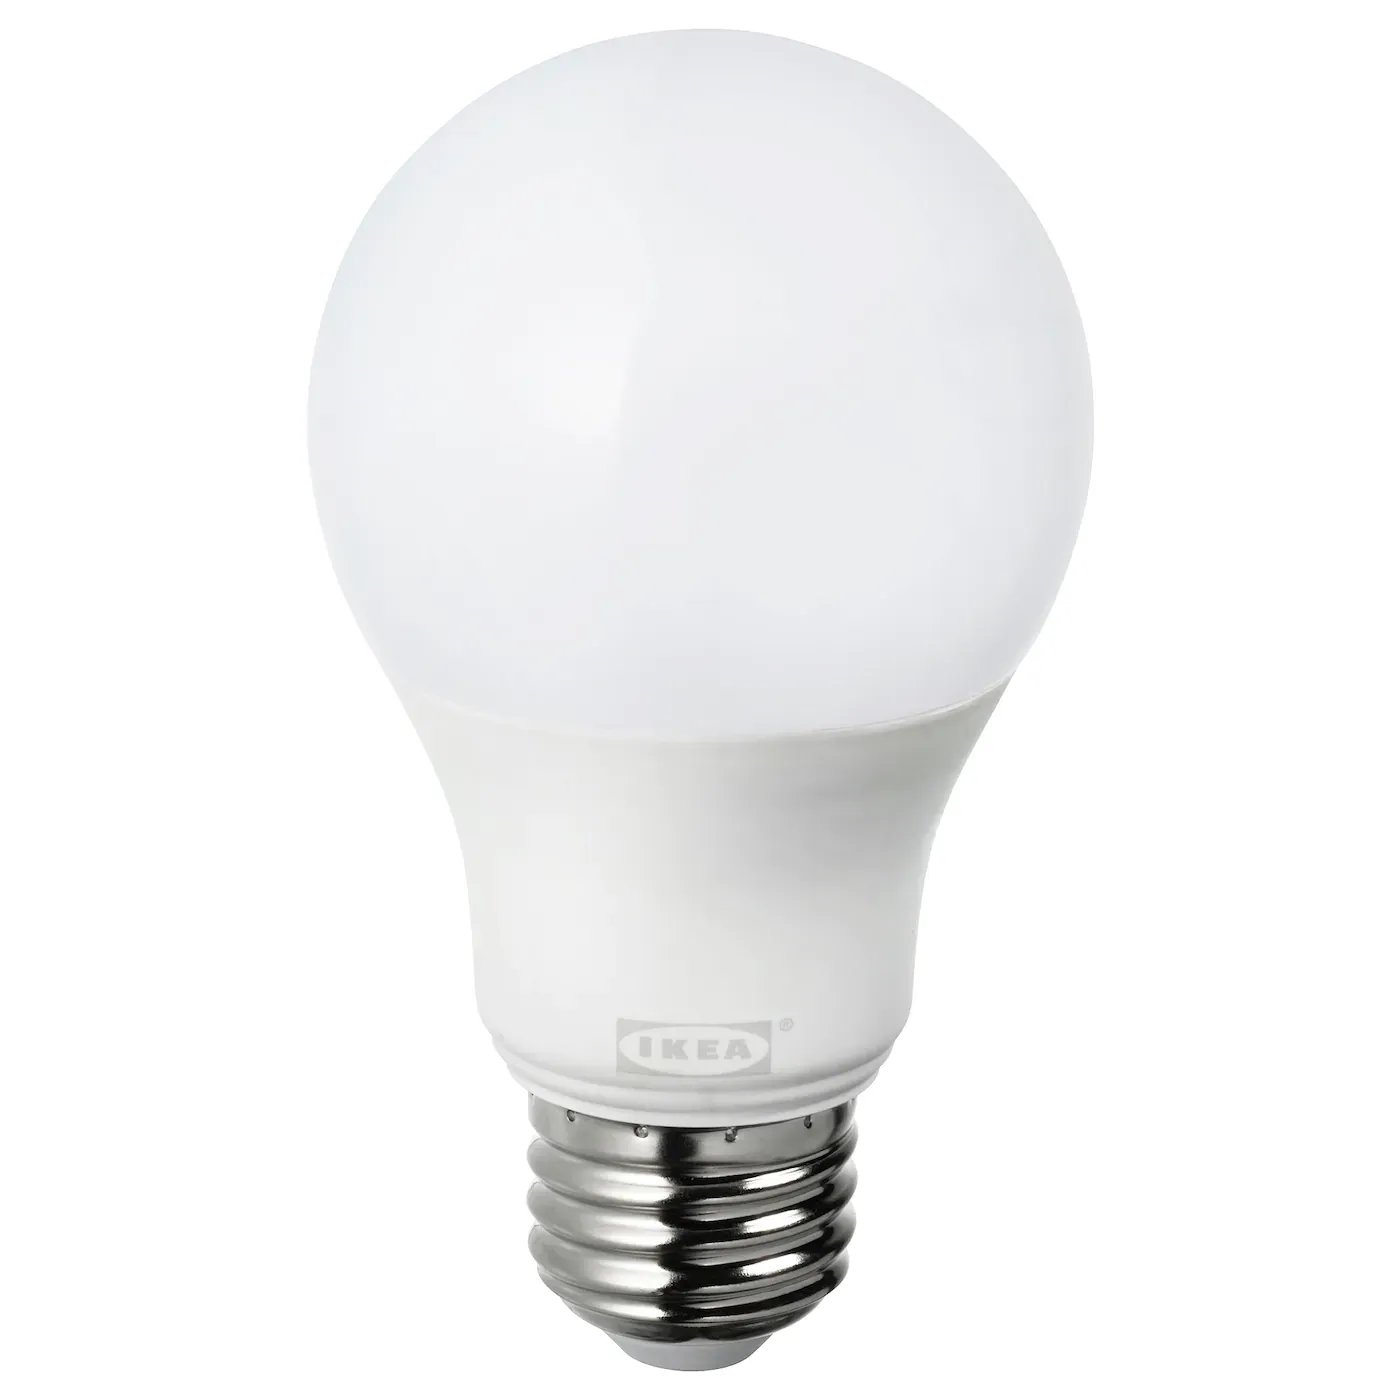 Tradfri LED bulb E27 806 lumen, dimmable warm white globe